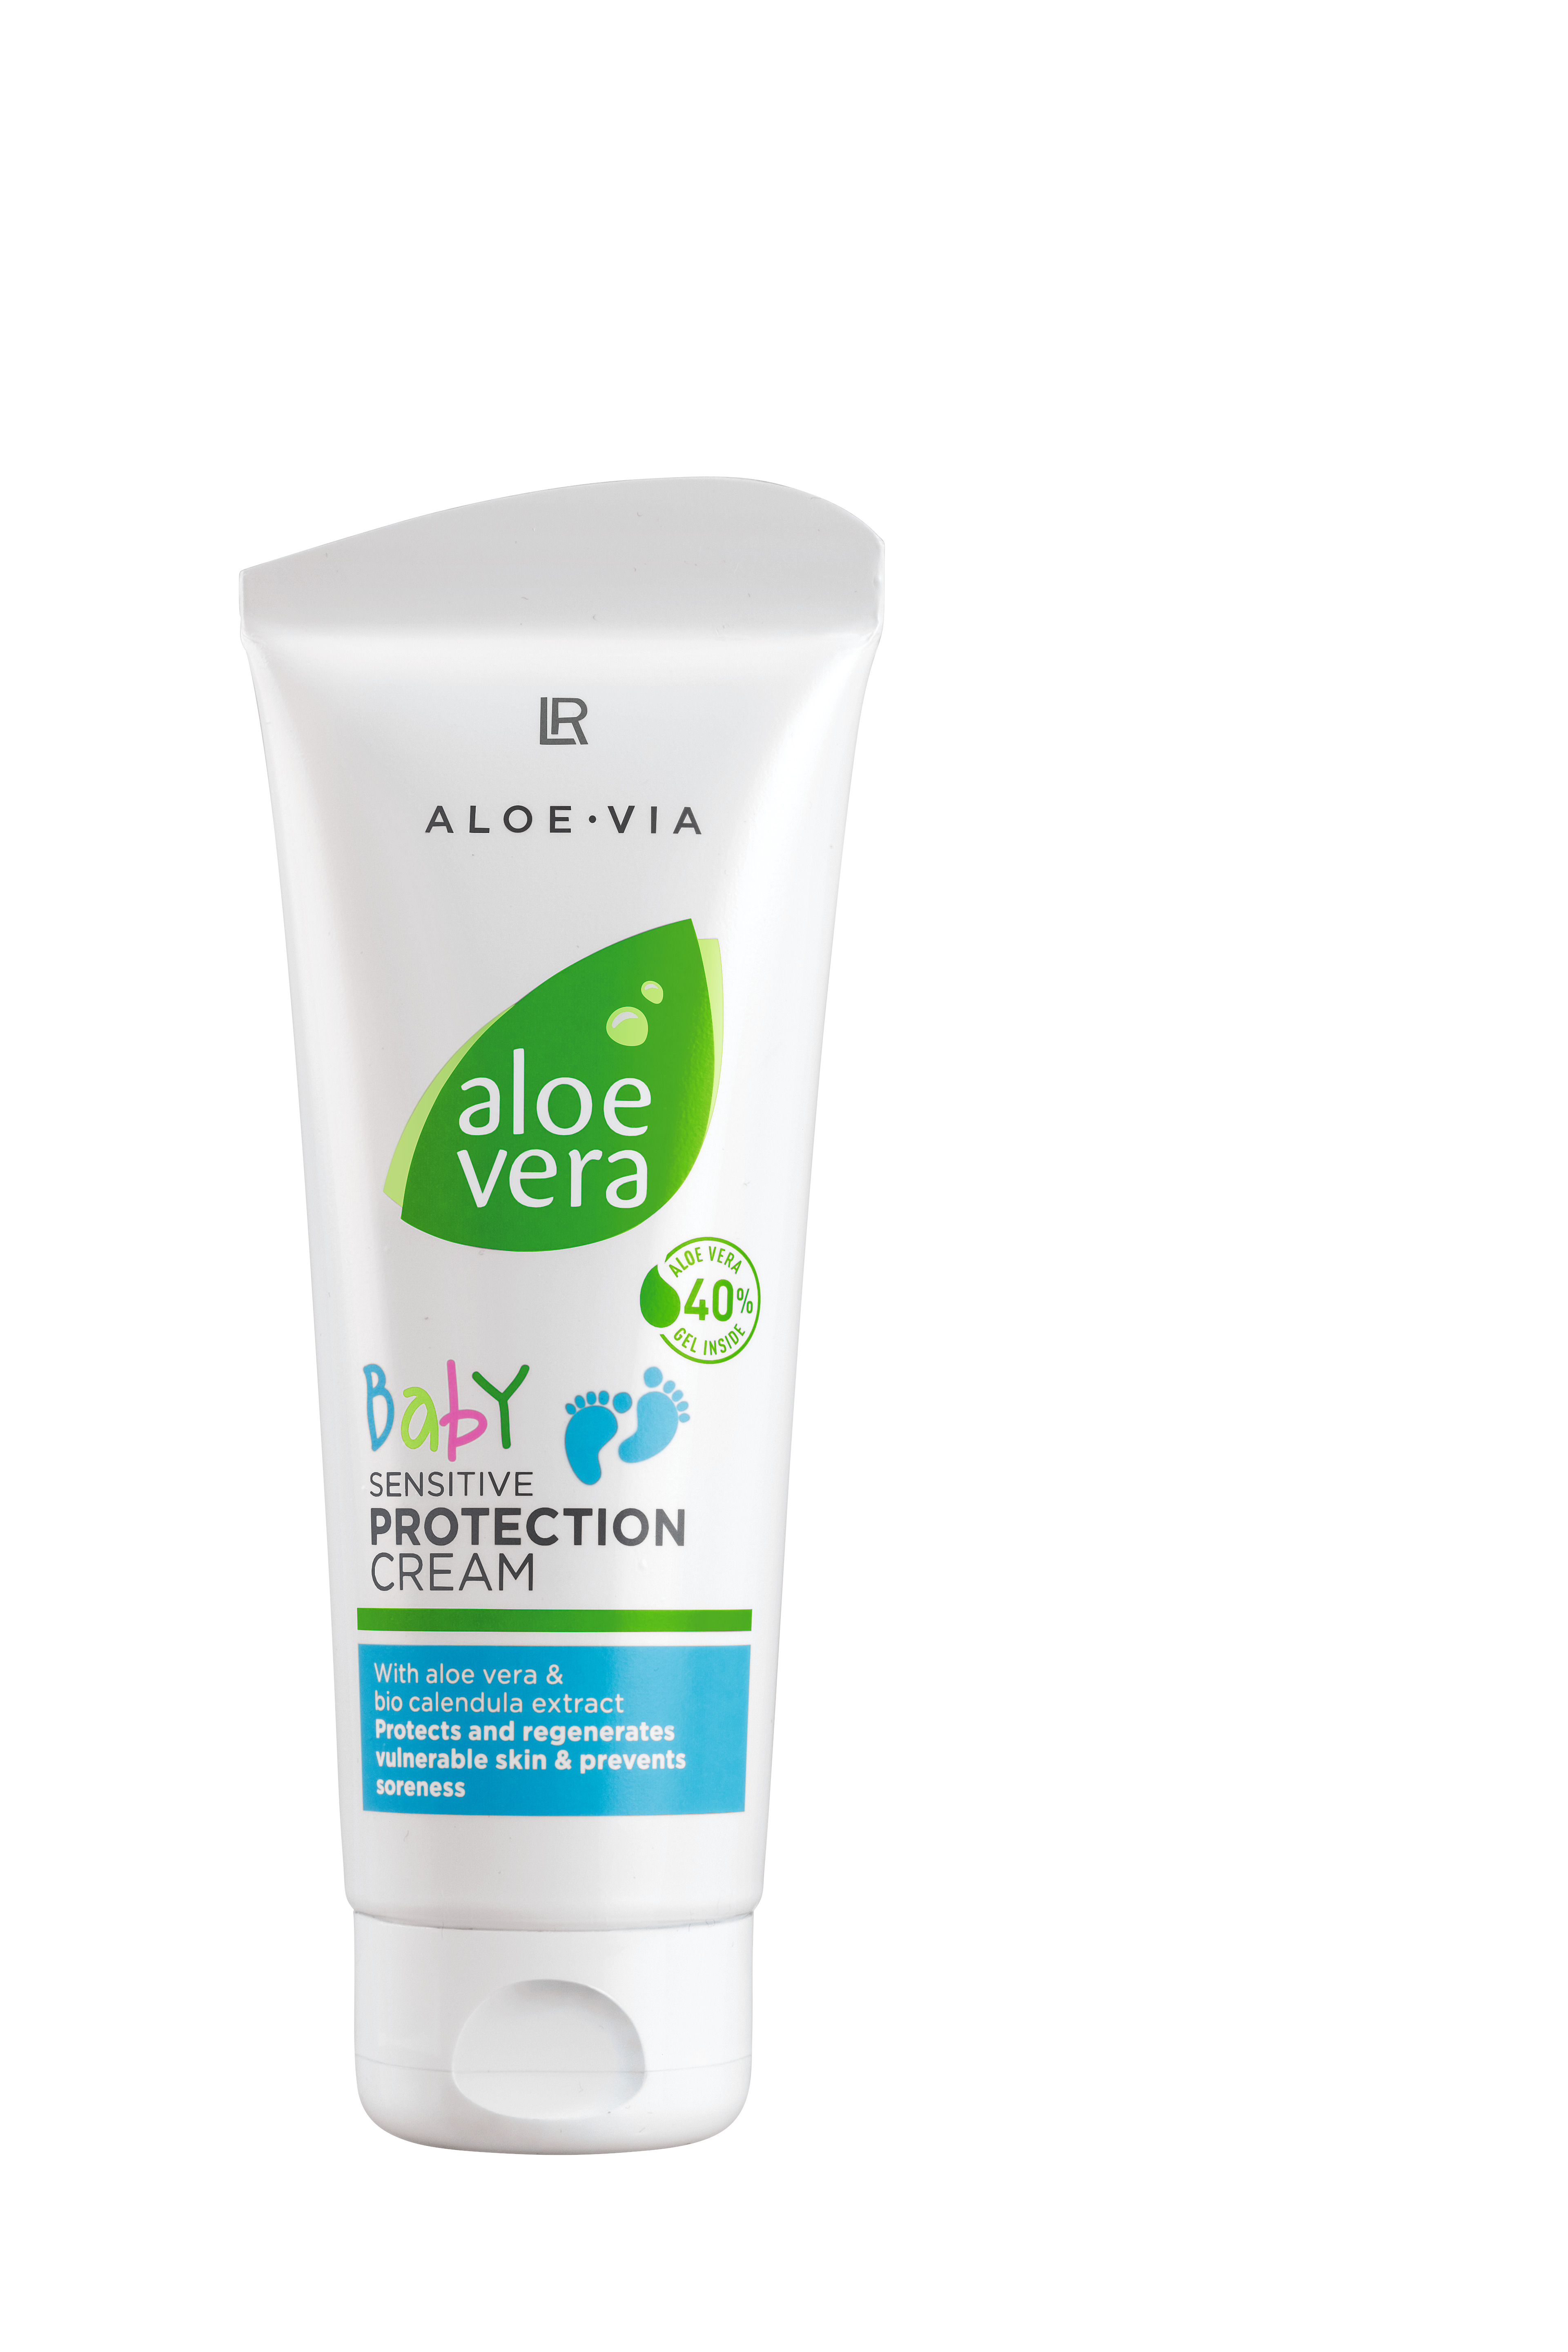 LR Aloe Via Baby Sensitive Protection Cream